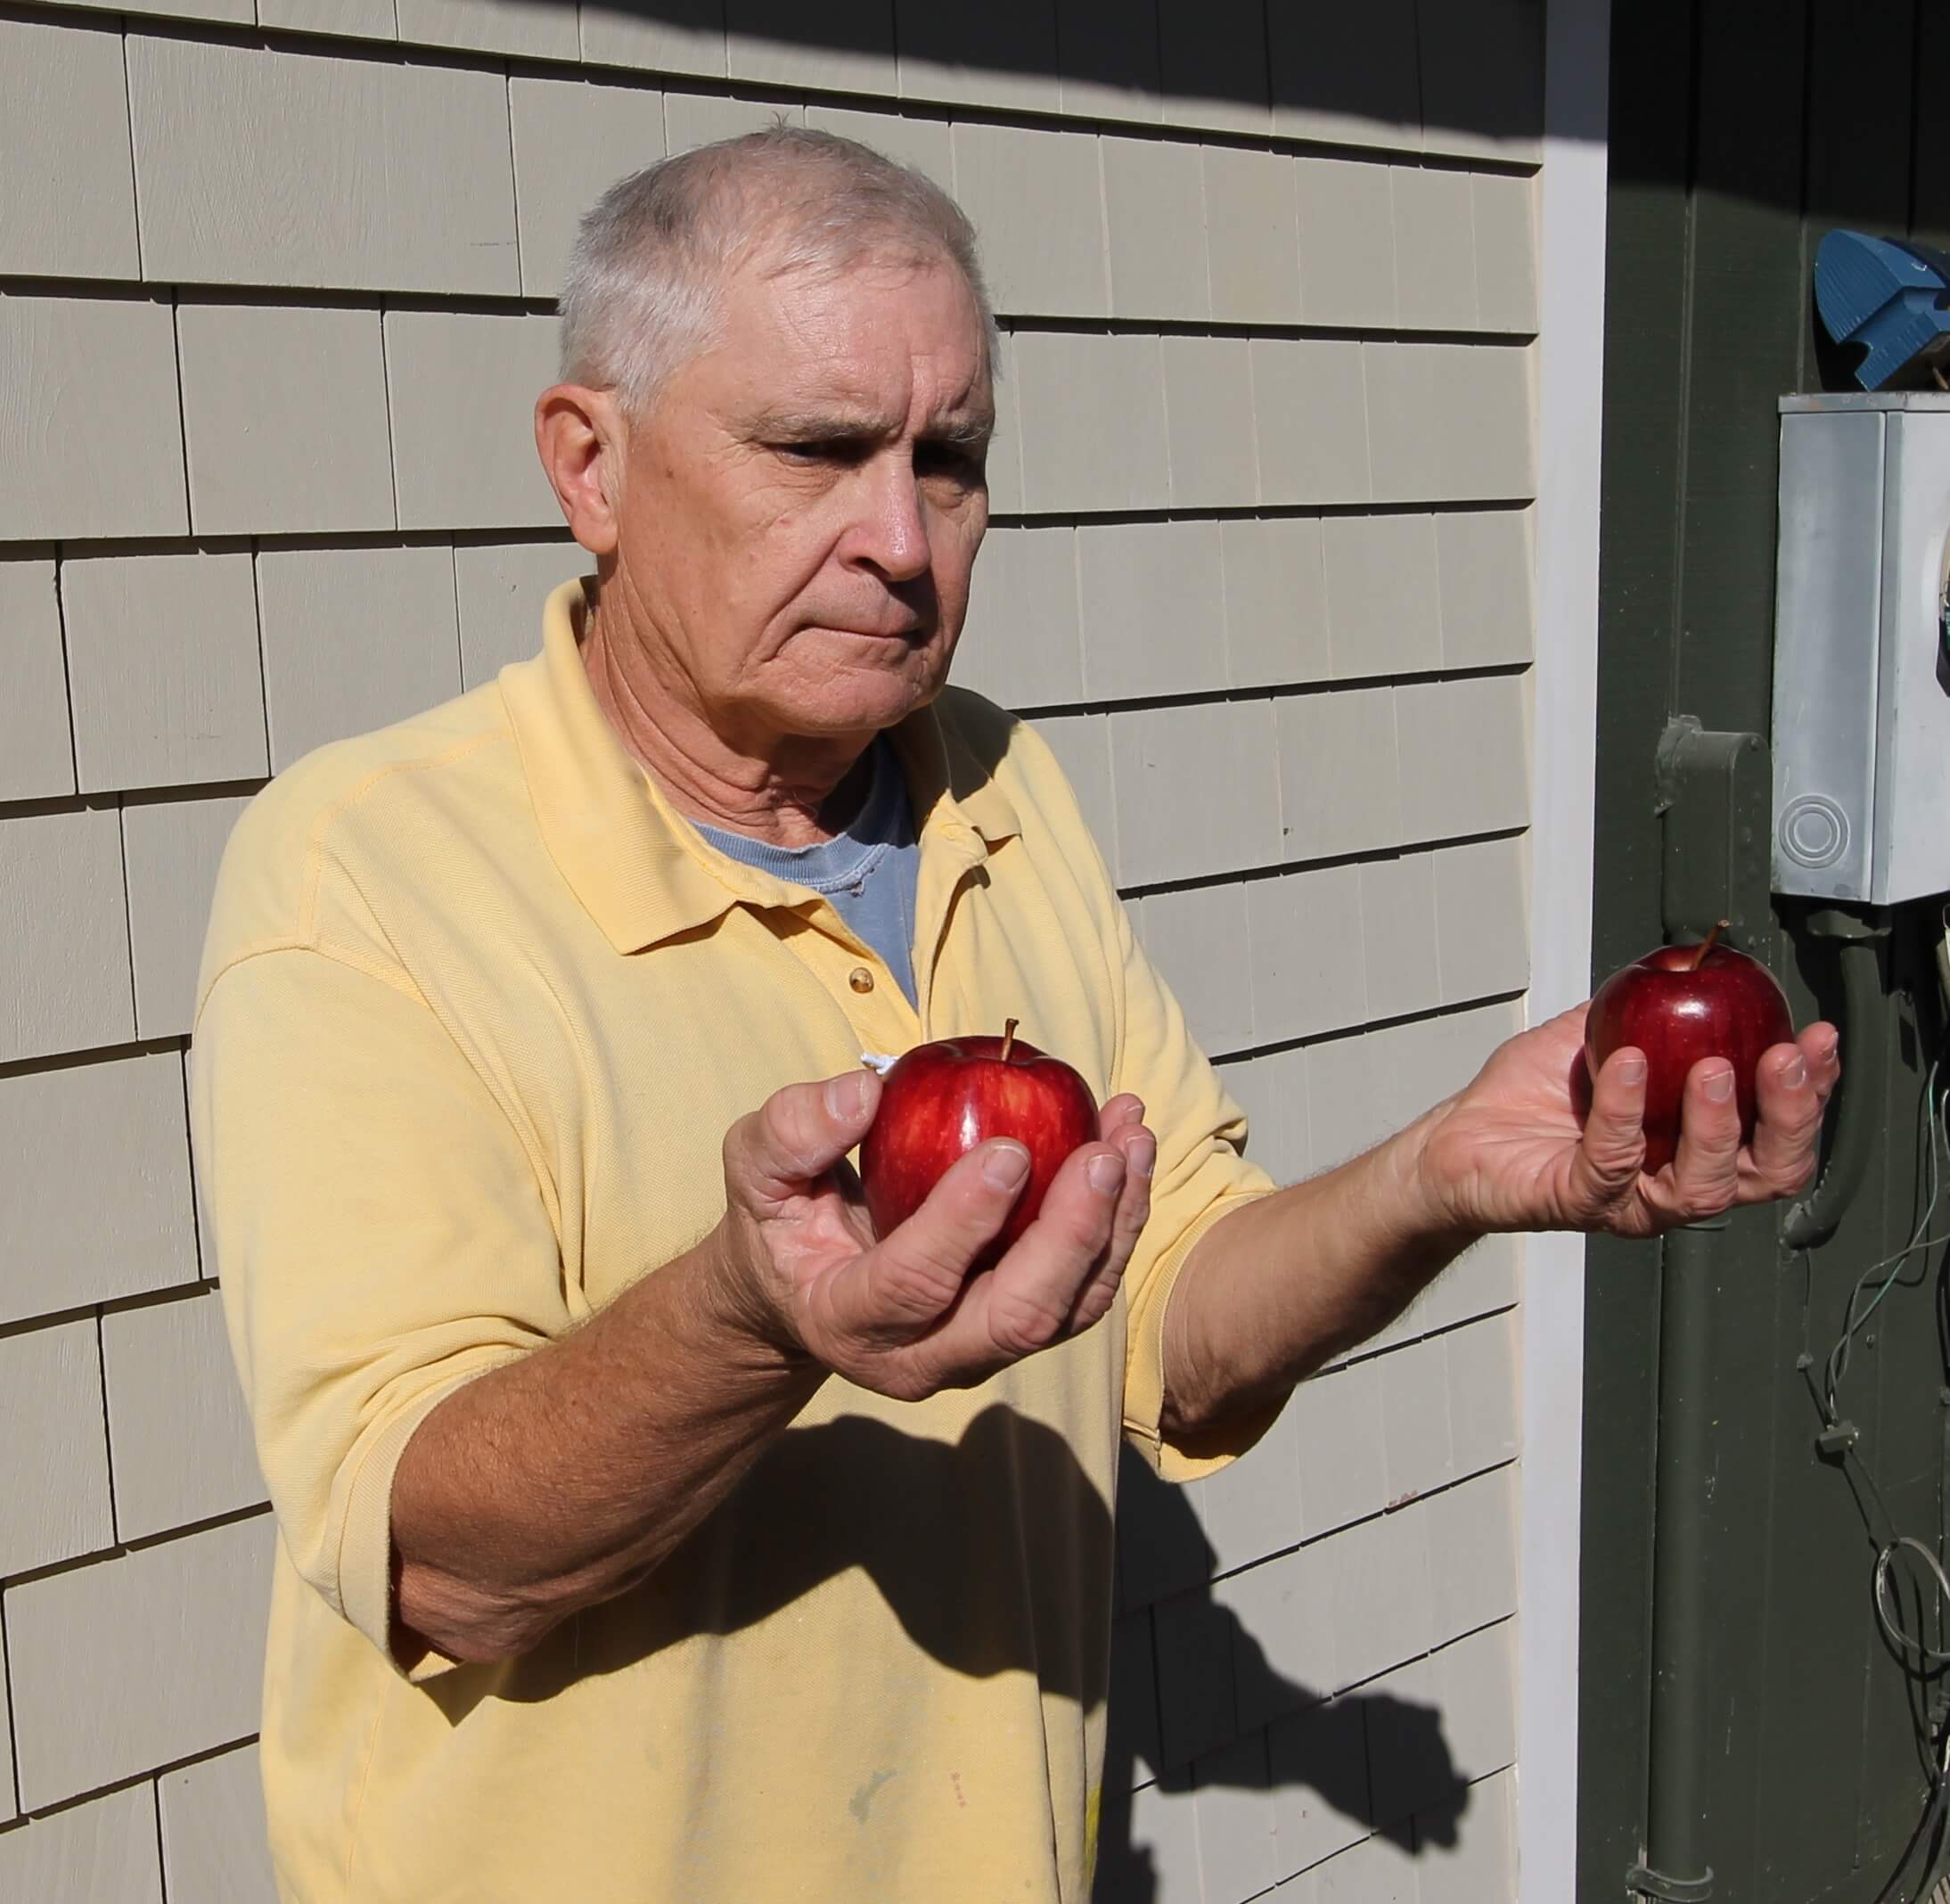 Man holding 2 Apples